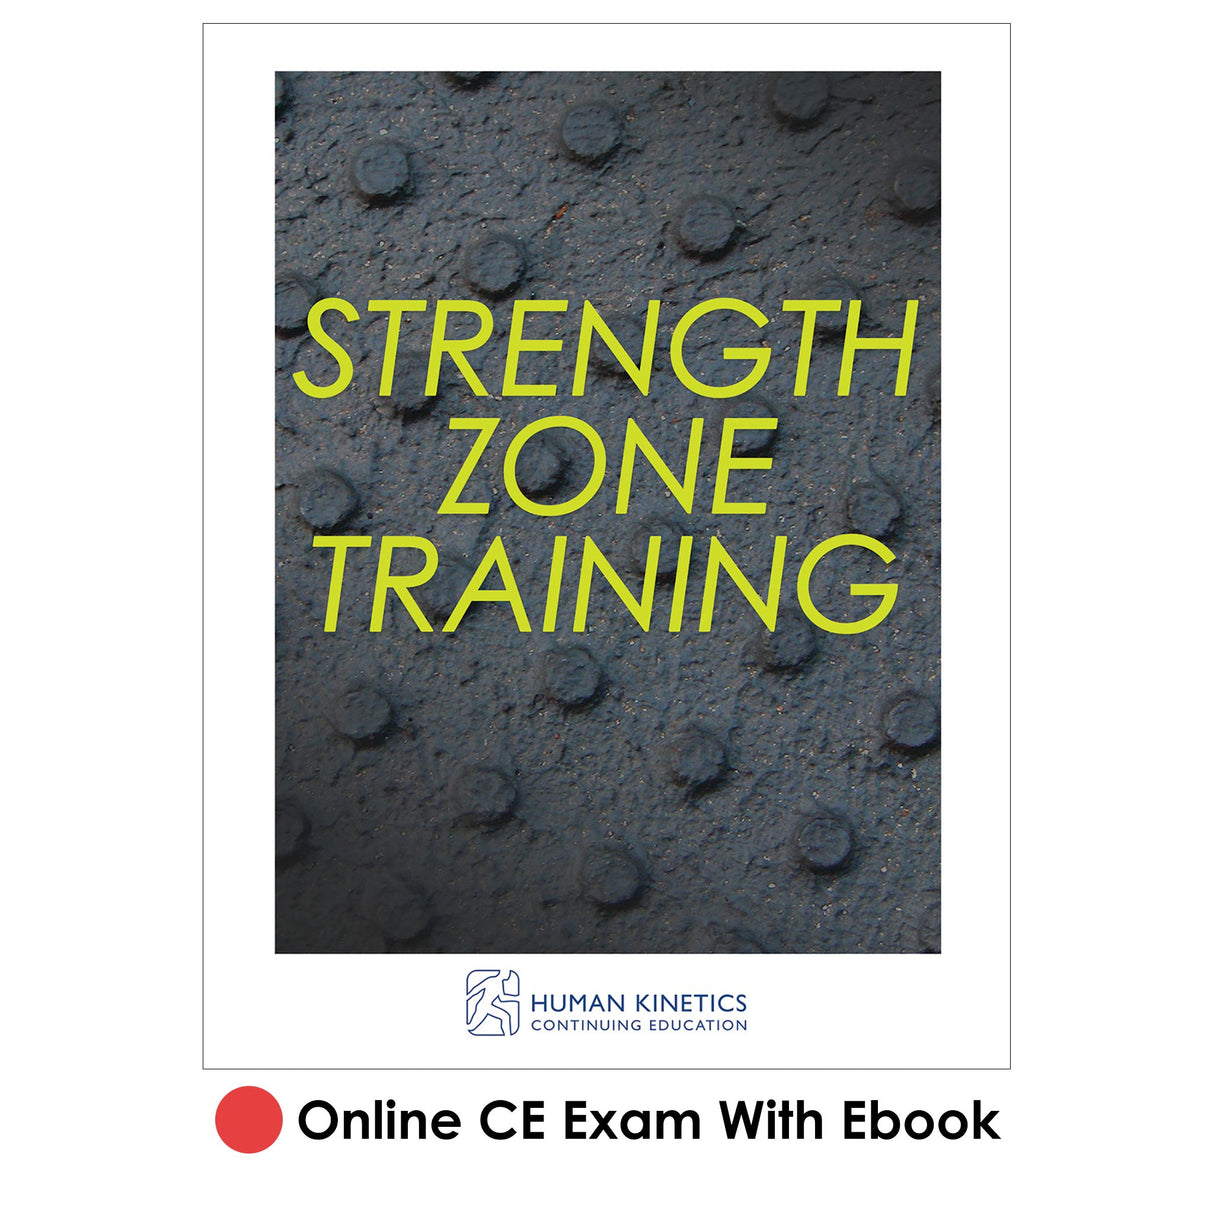 Strength Zone Training Online CE Exam With Ebook